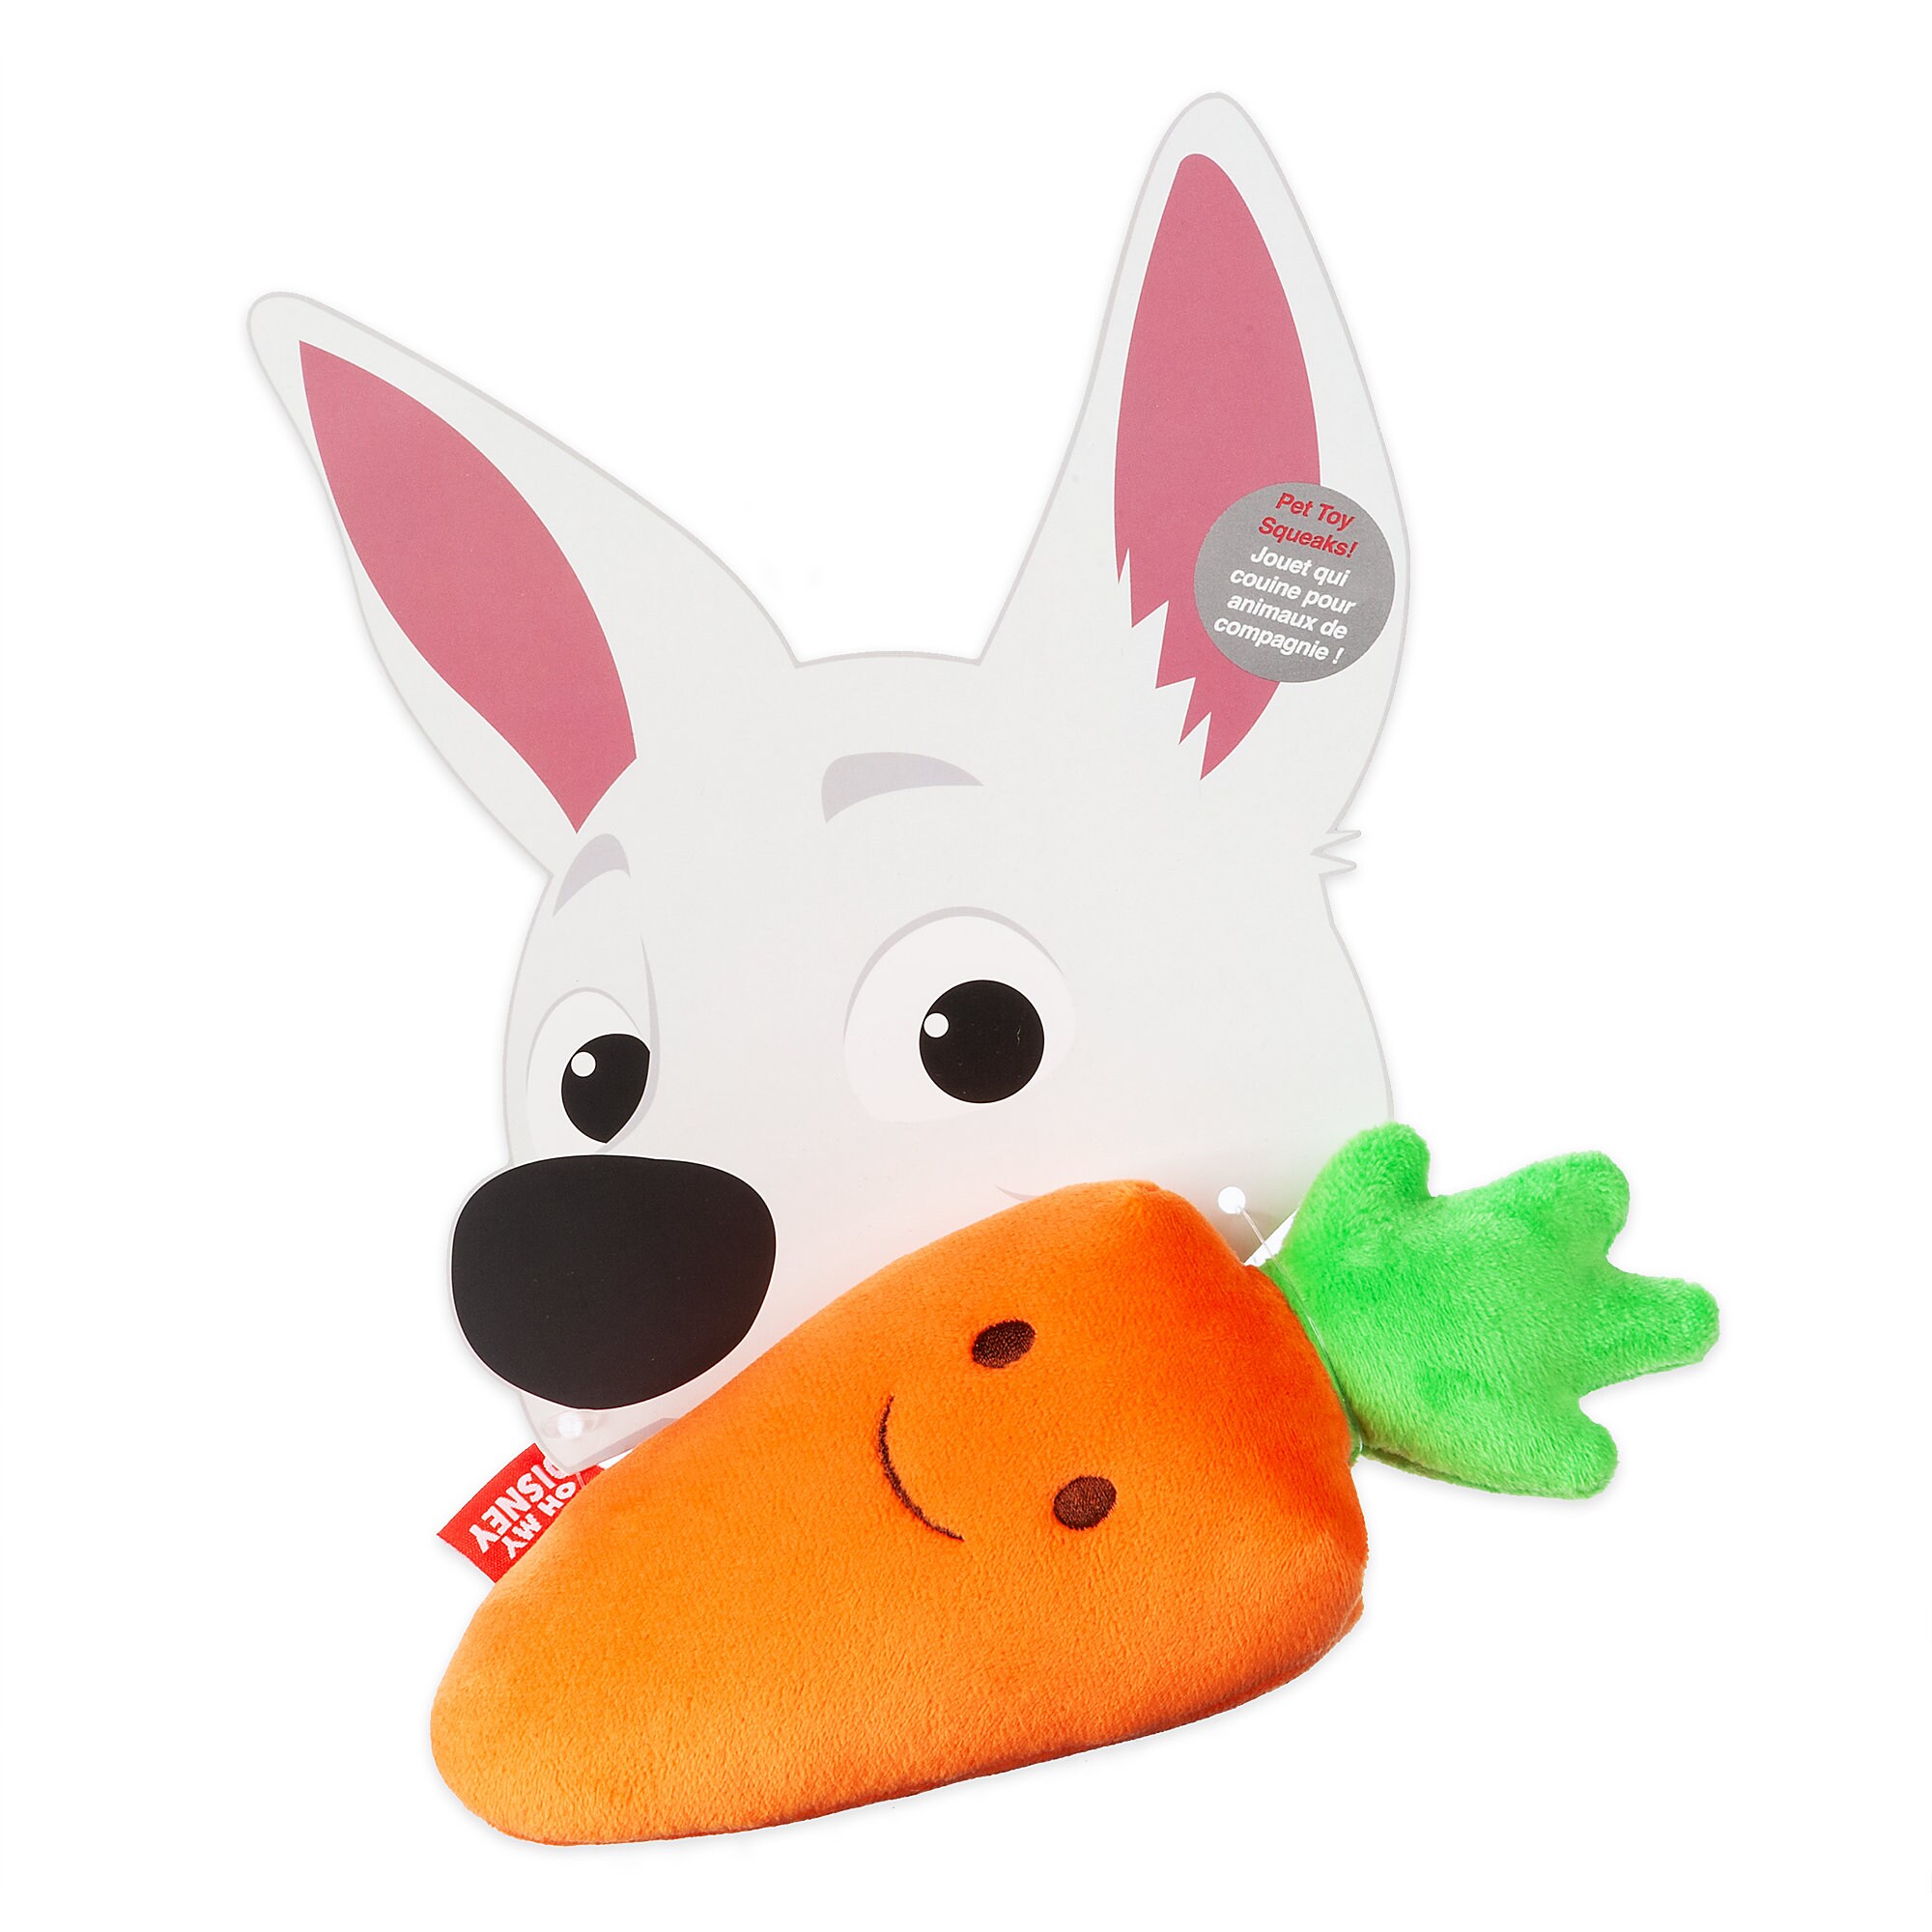 Bolt Mr. Carrot Chew Toy - Oh My Disney